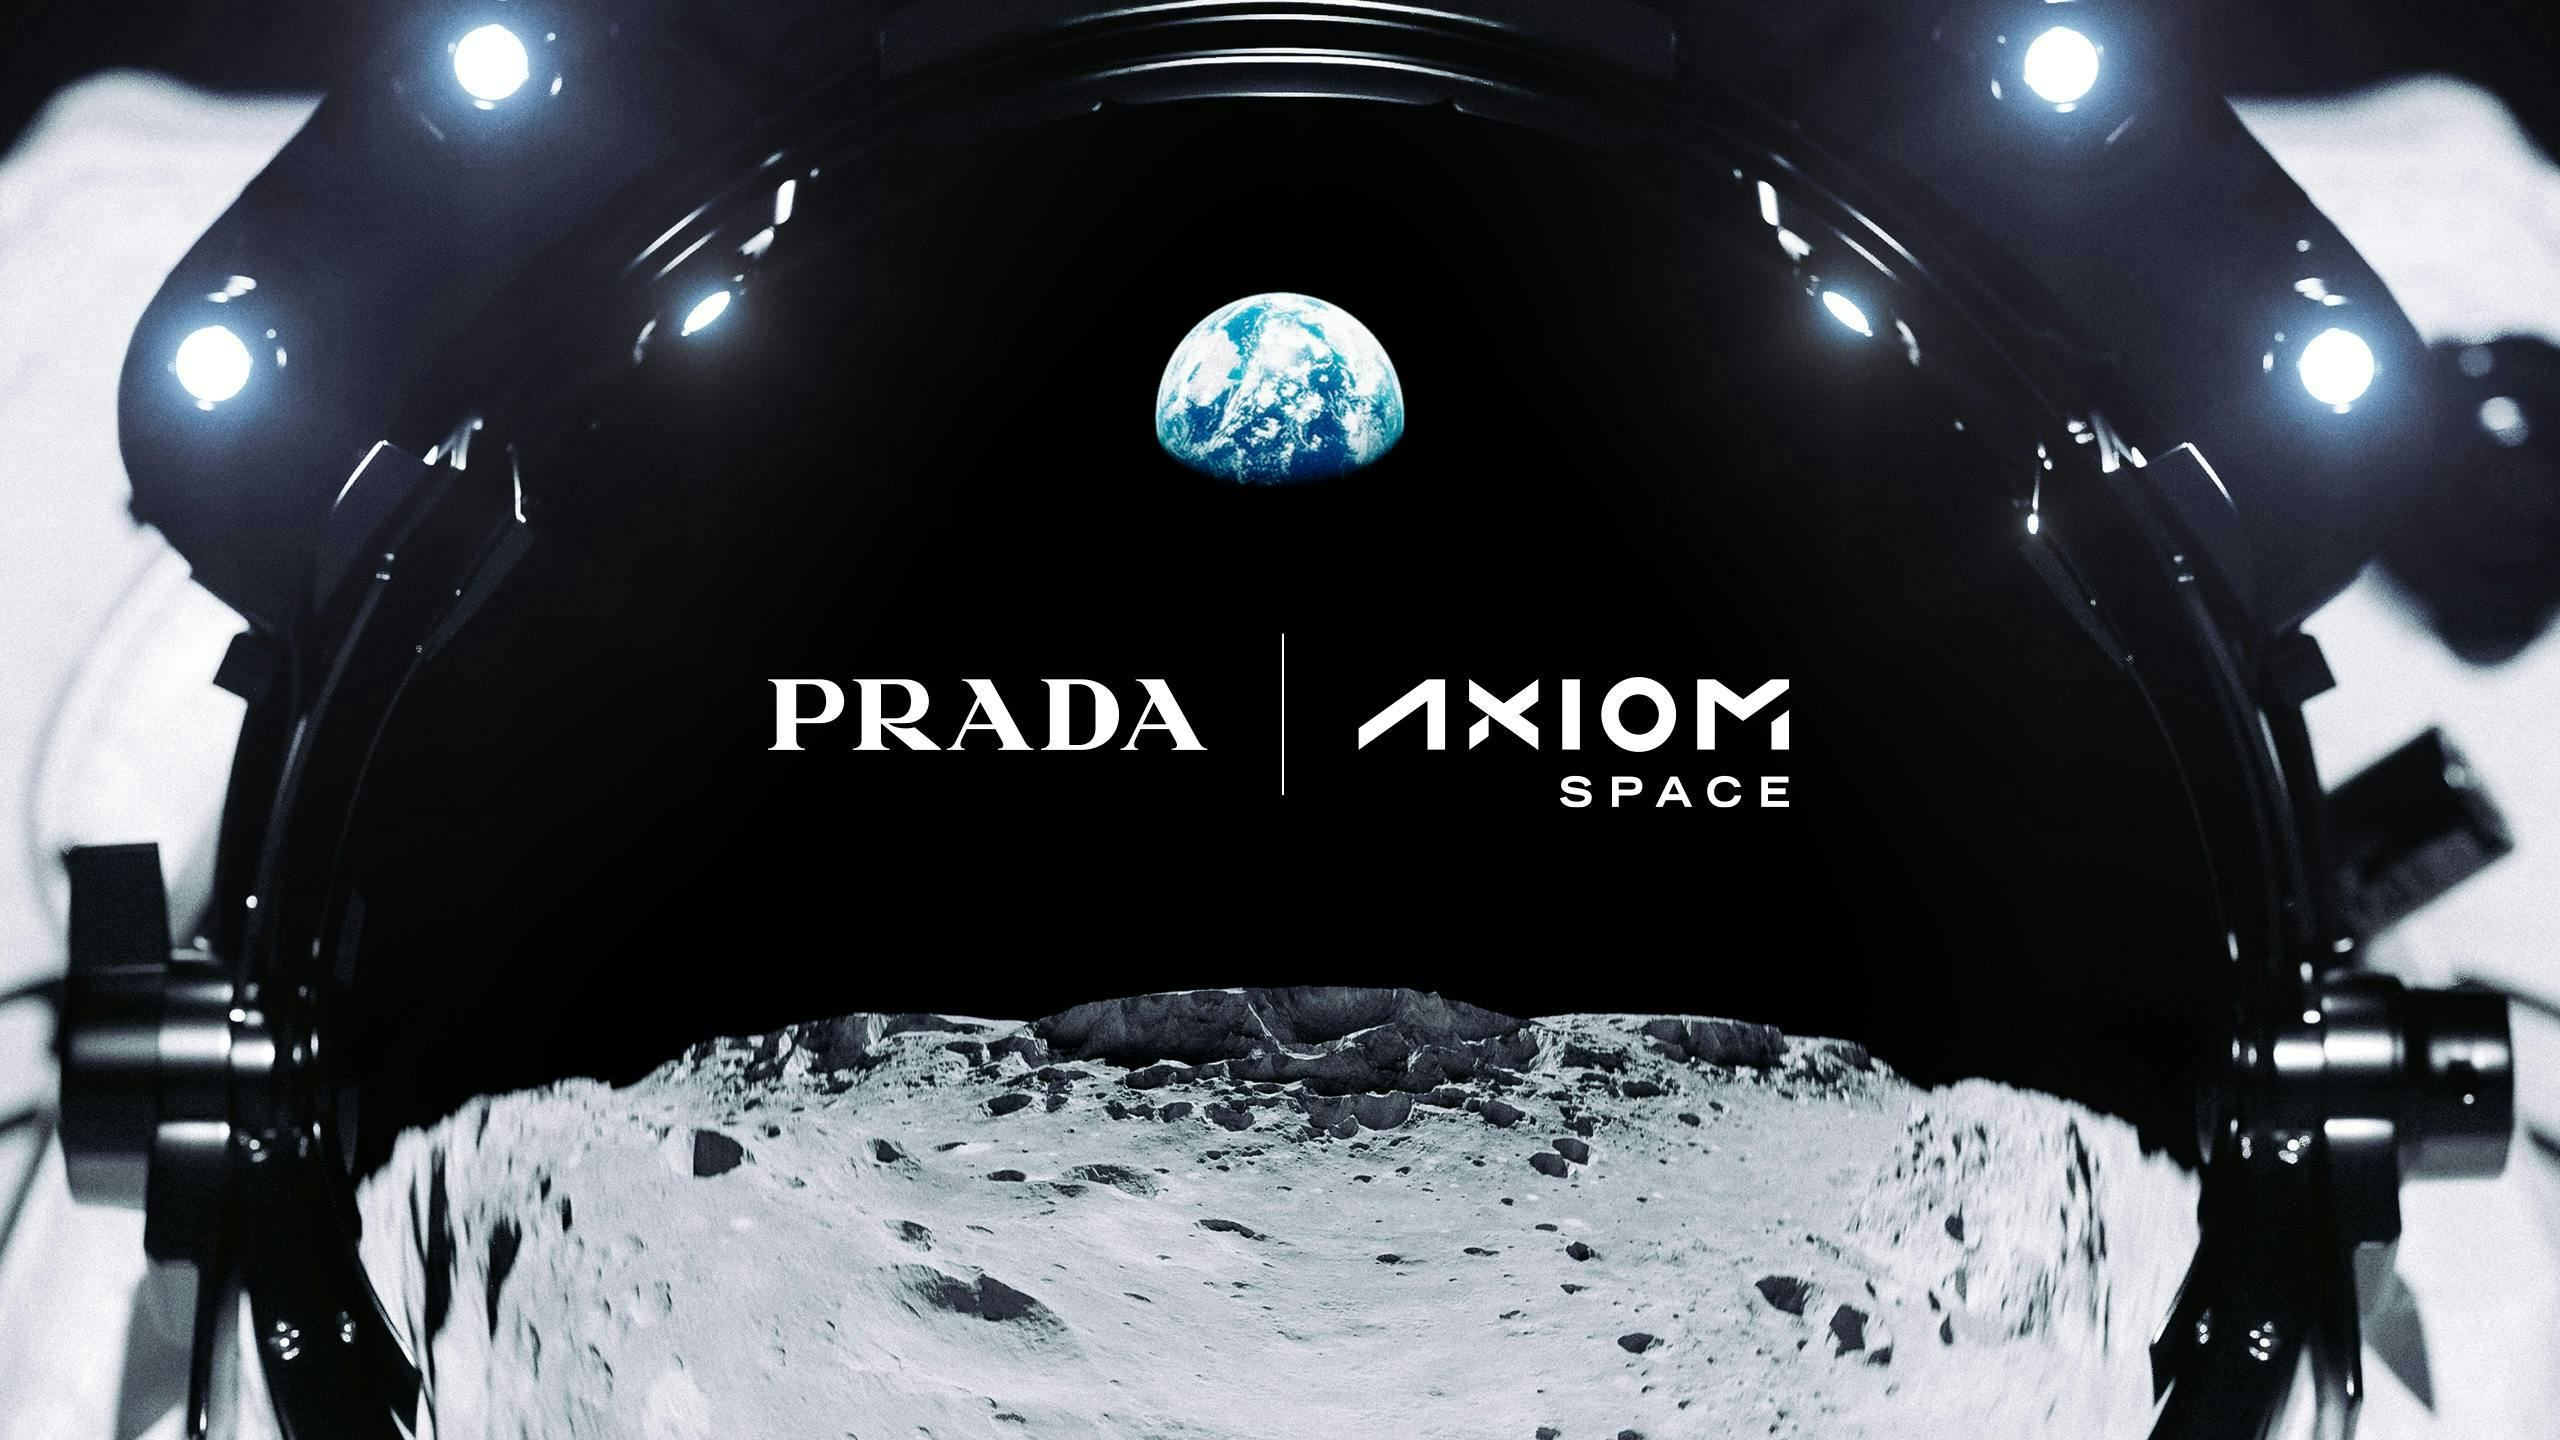 prada-axiom-space-design-nasa-spacesuits